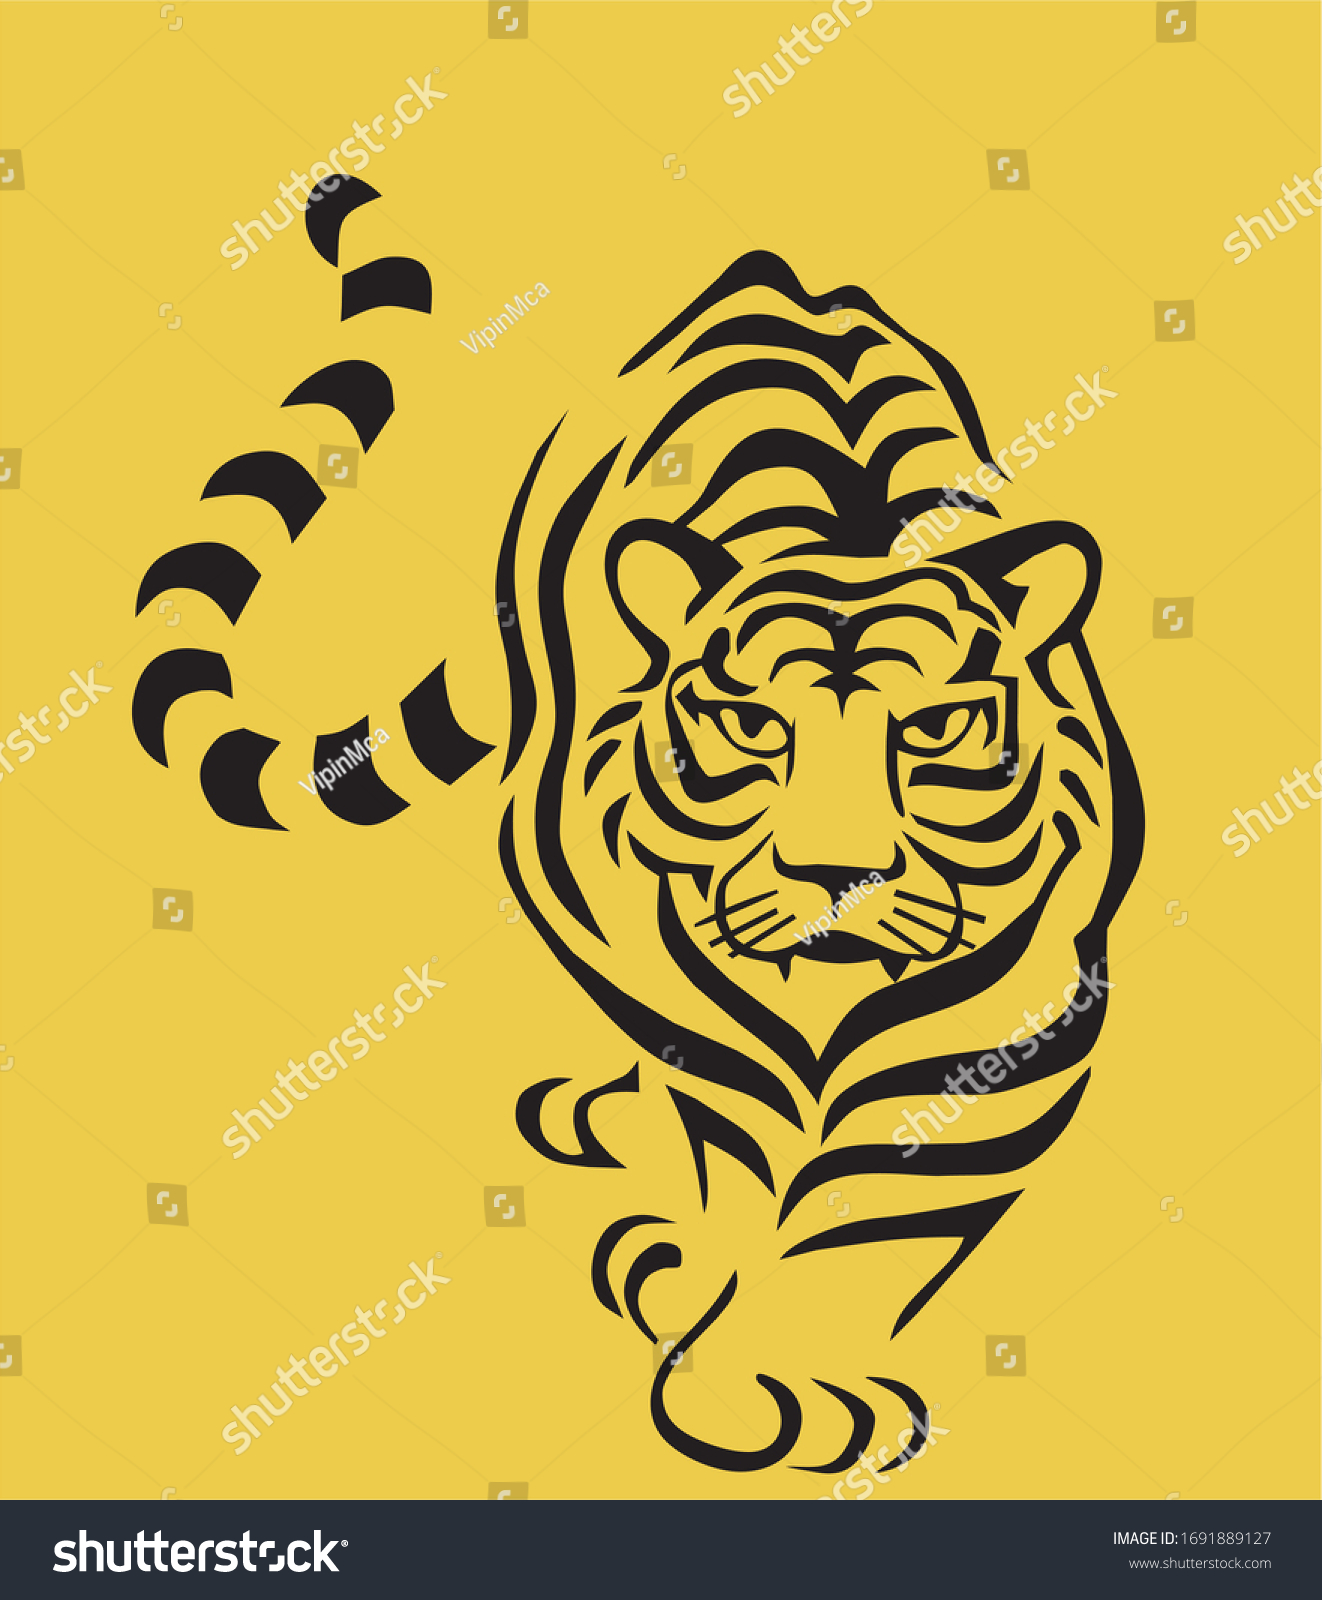 Daring Tiger Silhouette Vector Illustration Stock Vector Royalty Free 1691889127 